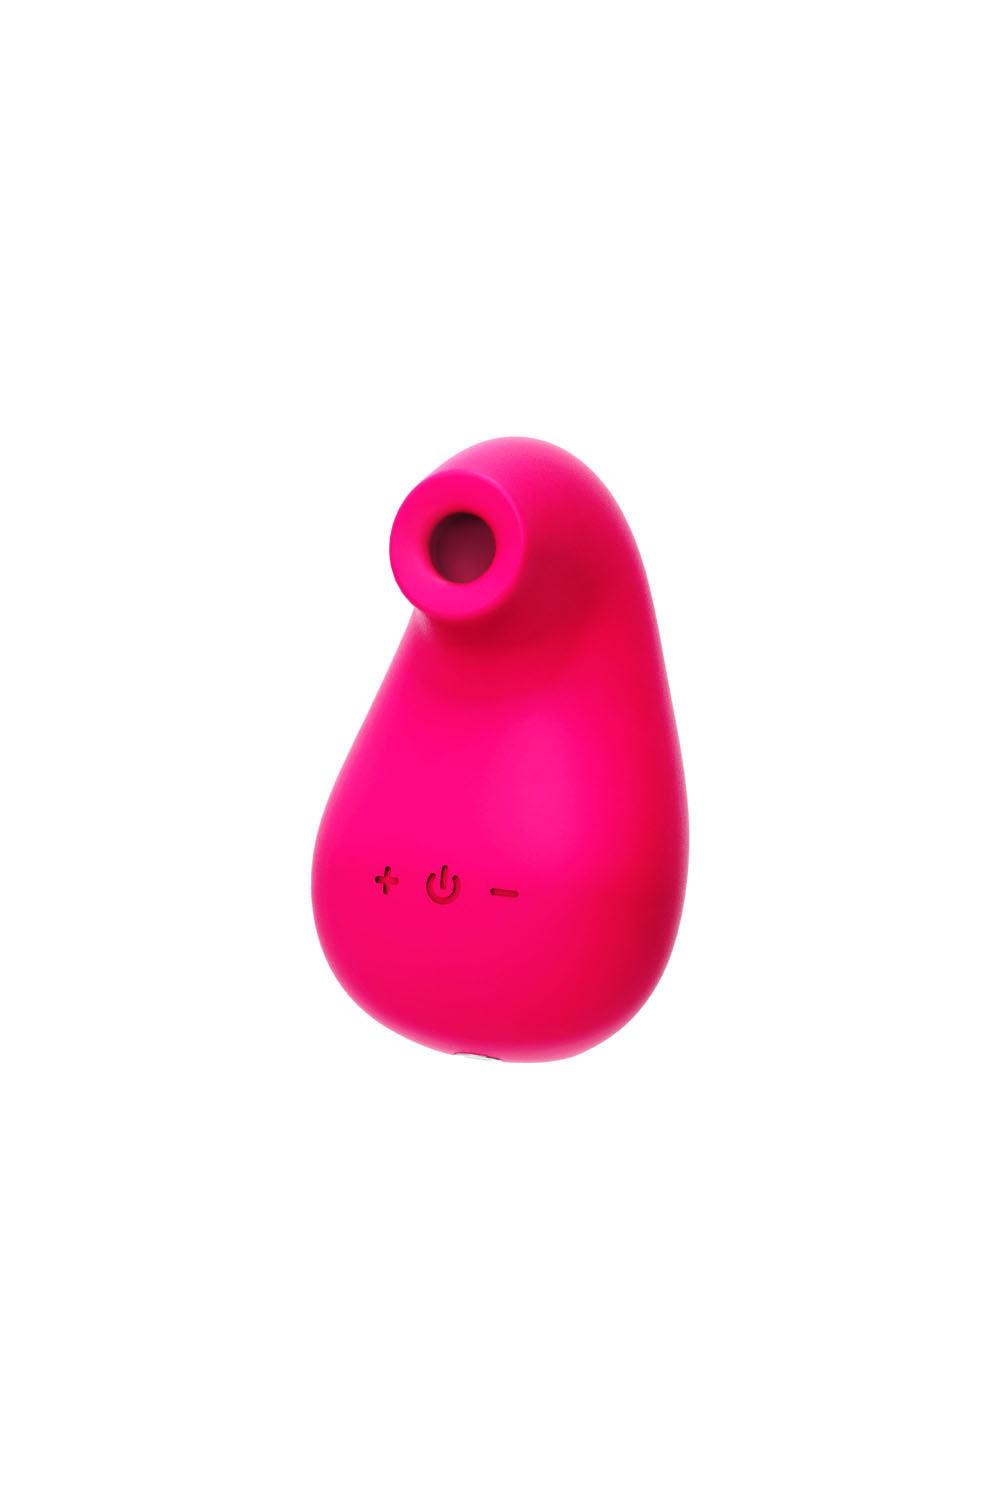 VeDO Suki - The Ultimate Finger Vibrator Foxy Pink